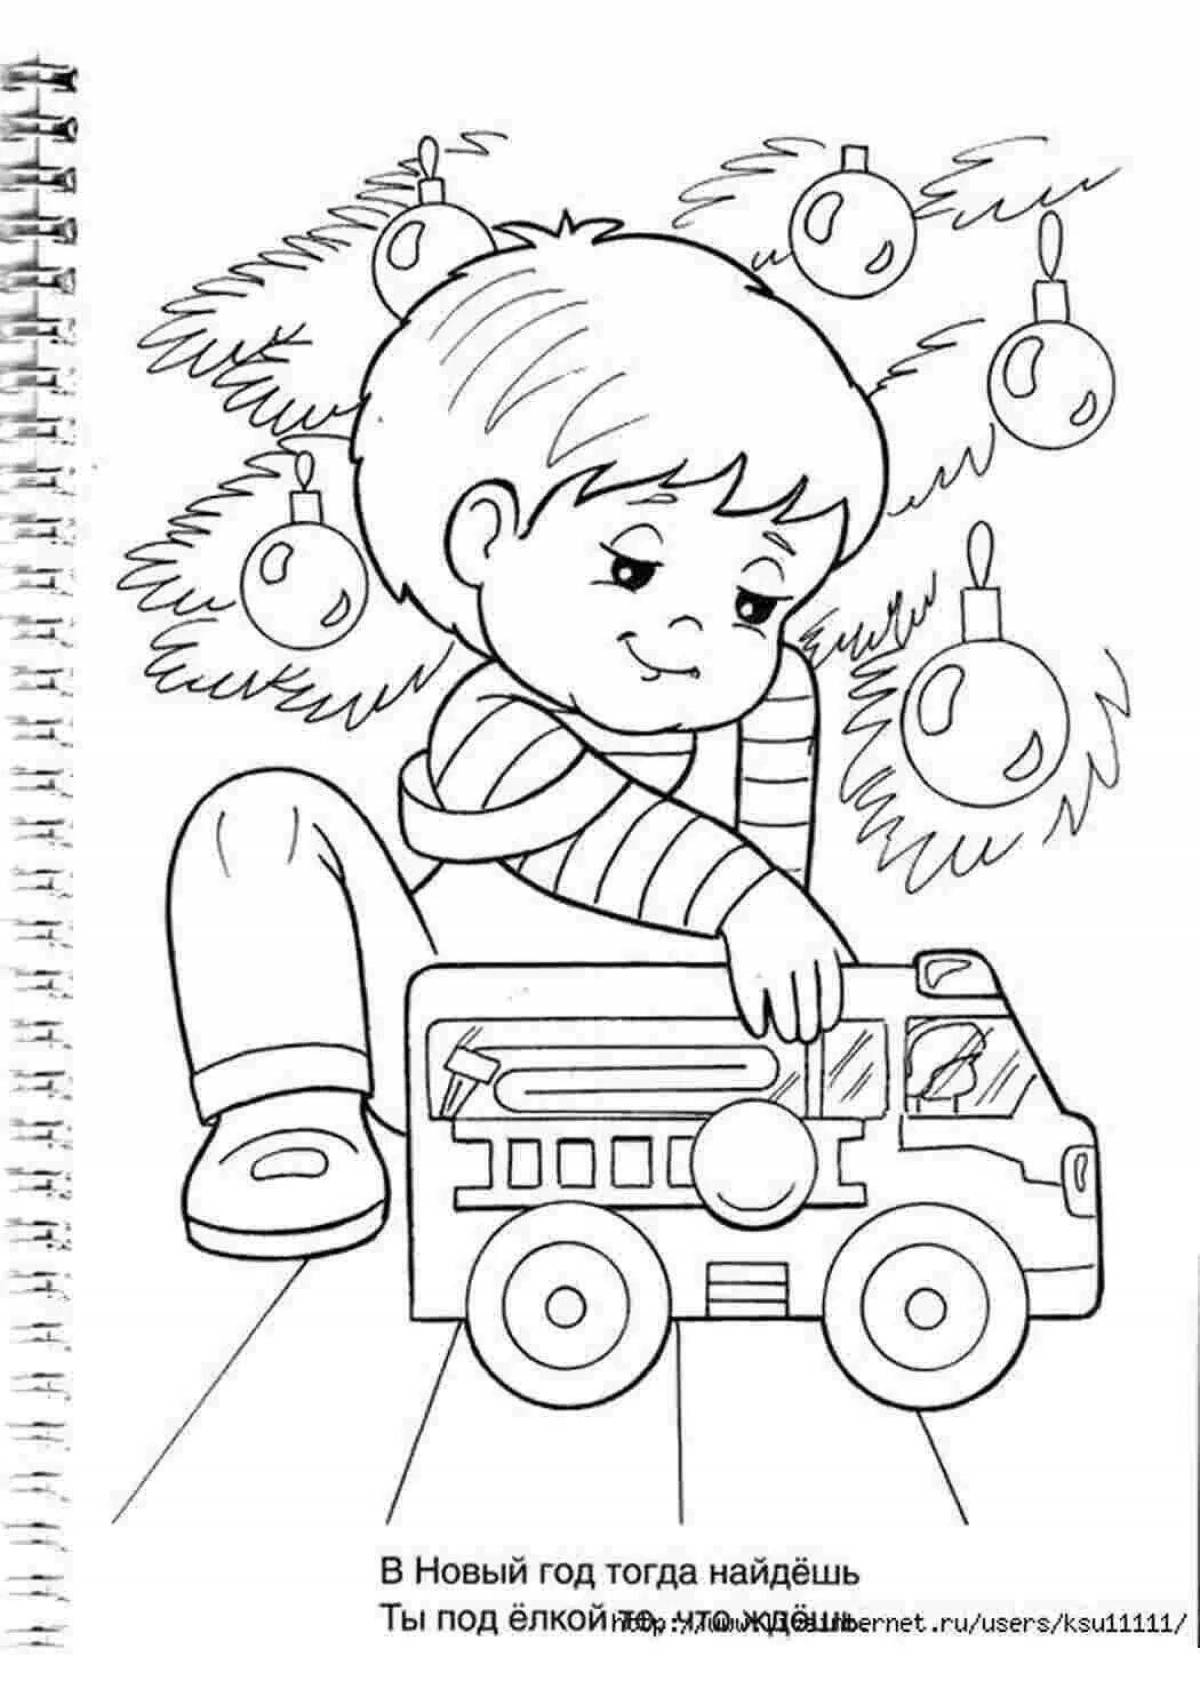 Whimsical Christmas coloring book for boys